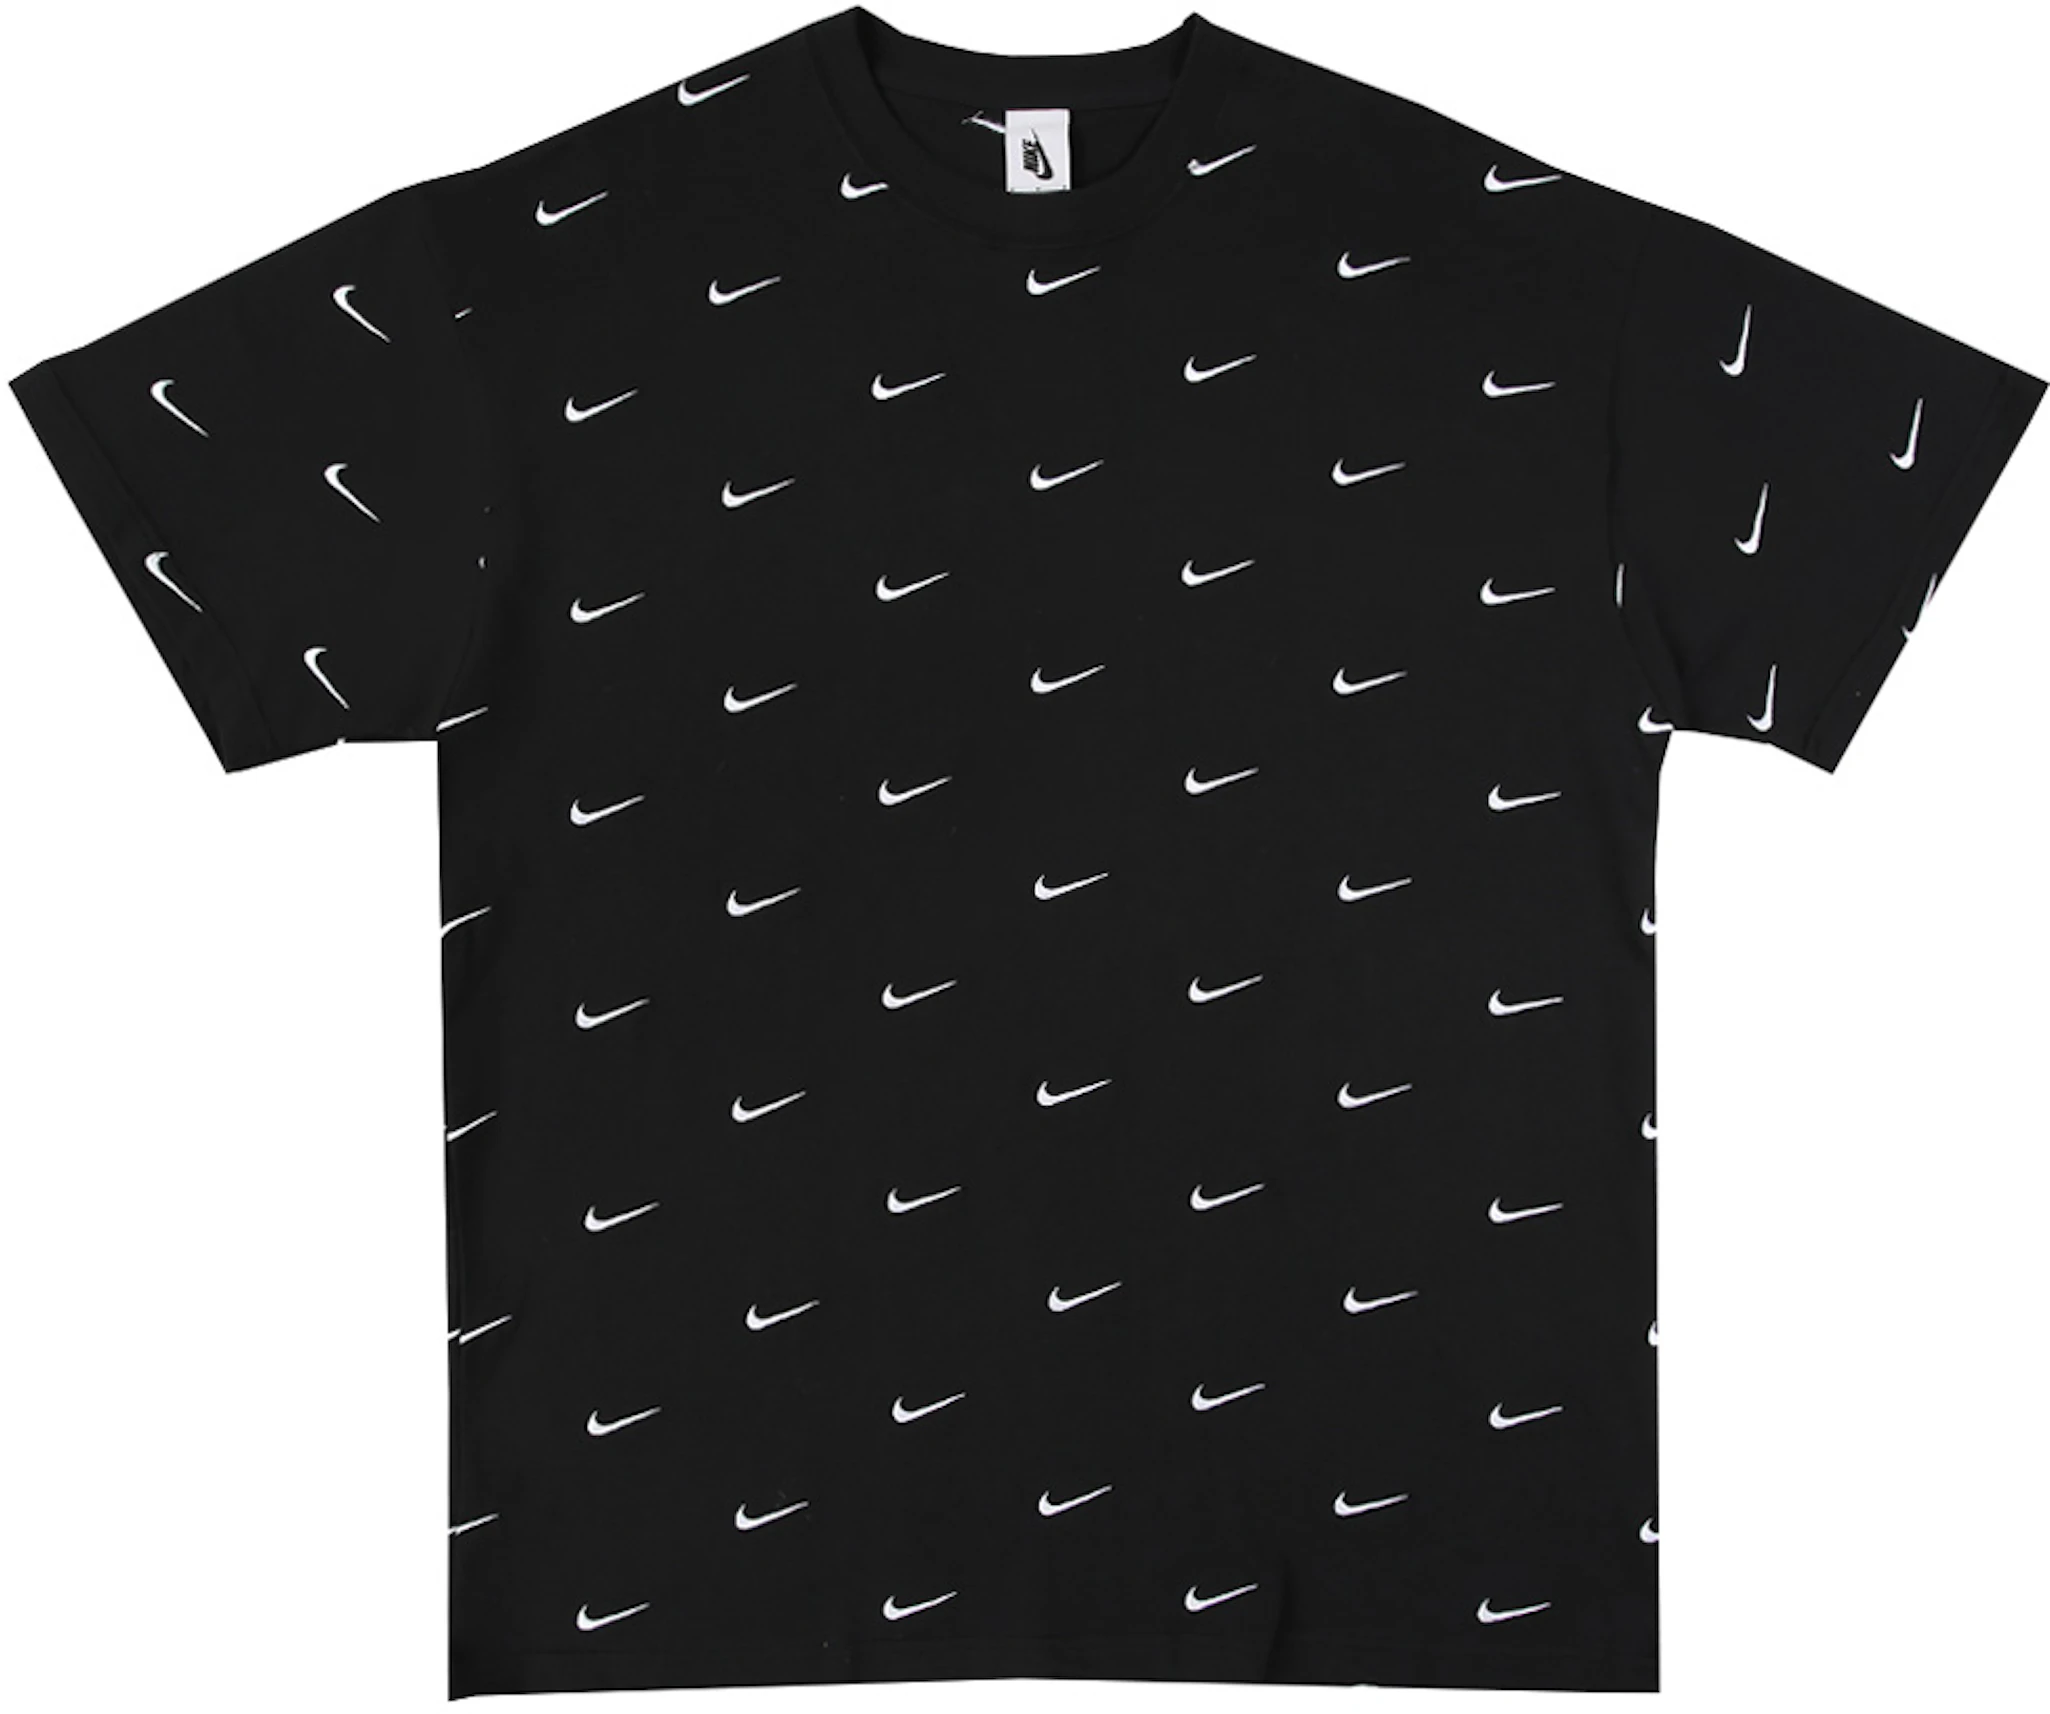 Nike All Over Swoosh Logo T-Shirt Black - Fw19 - Us